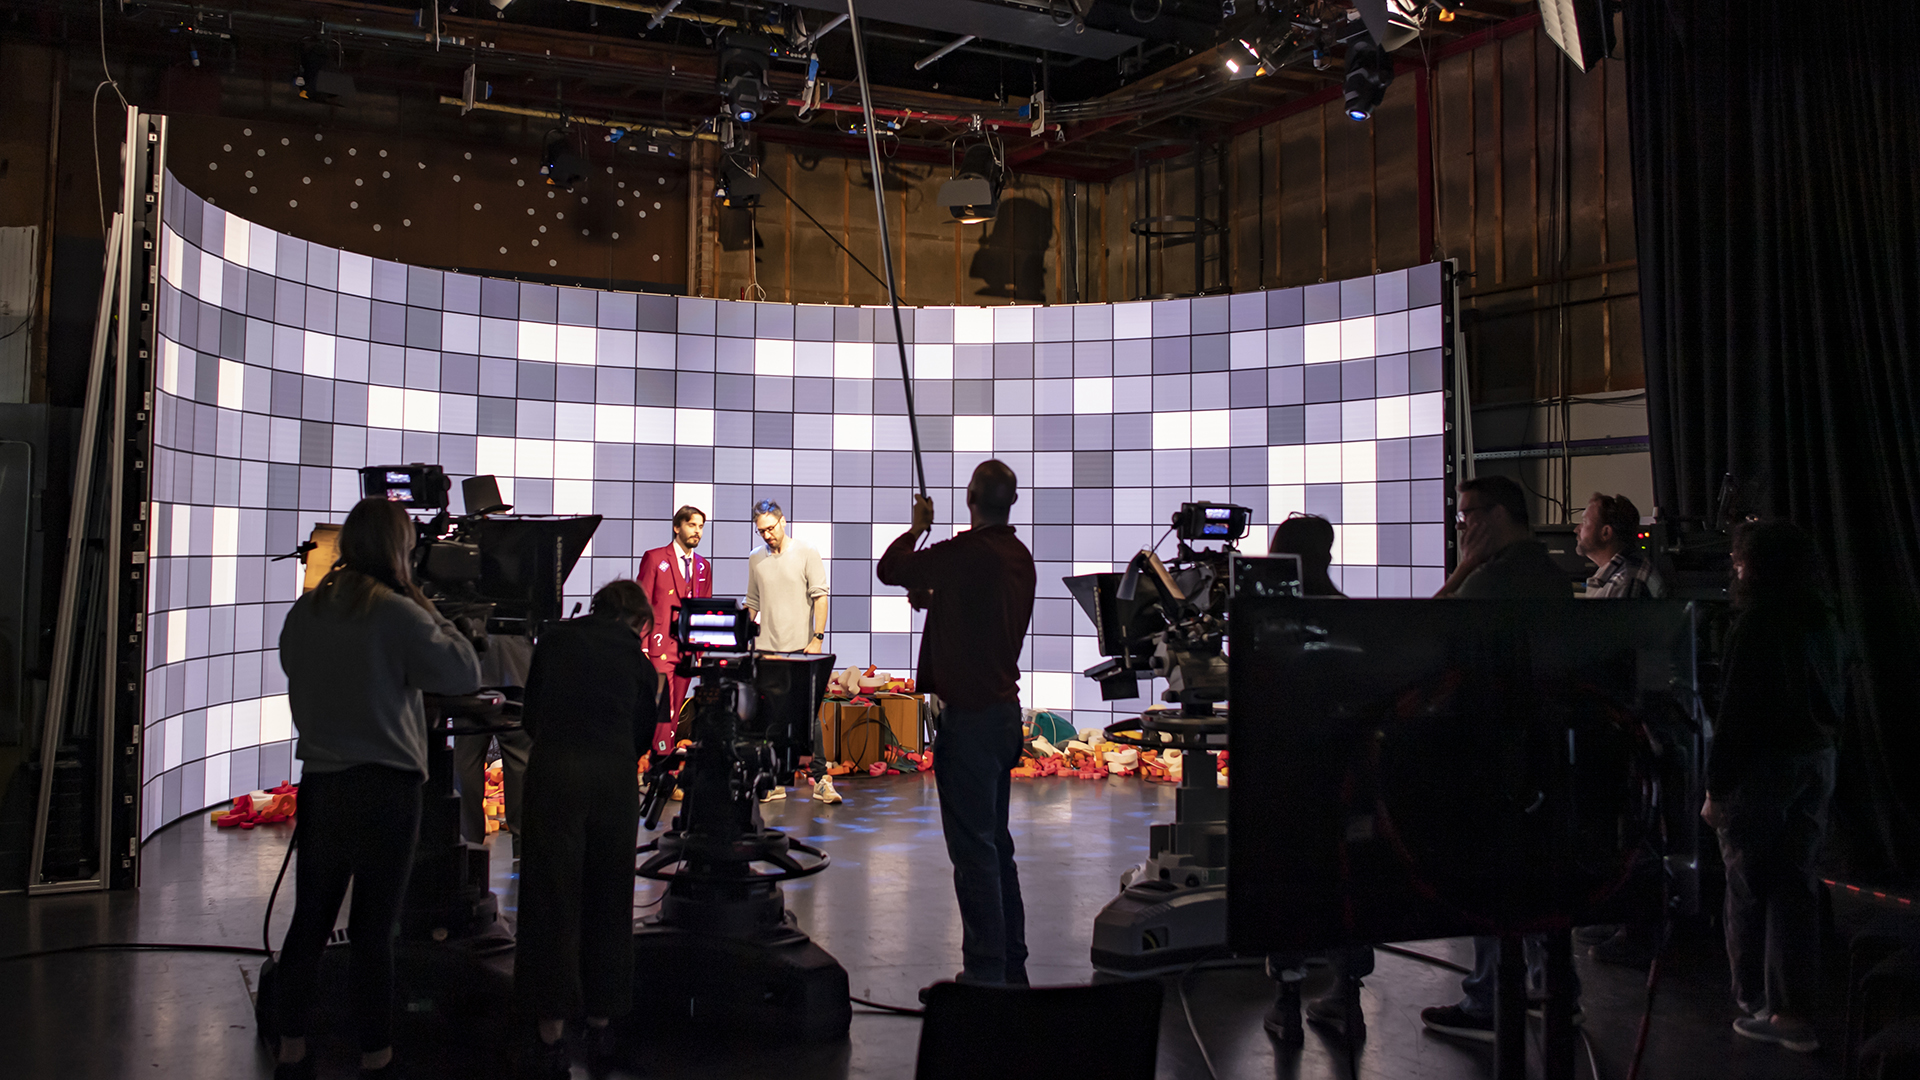 Television Entertainment shoot using an LED wall